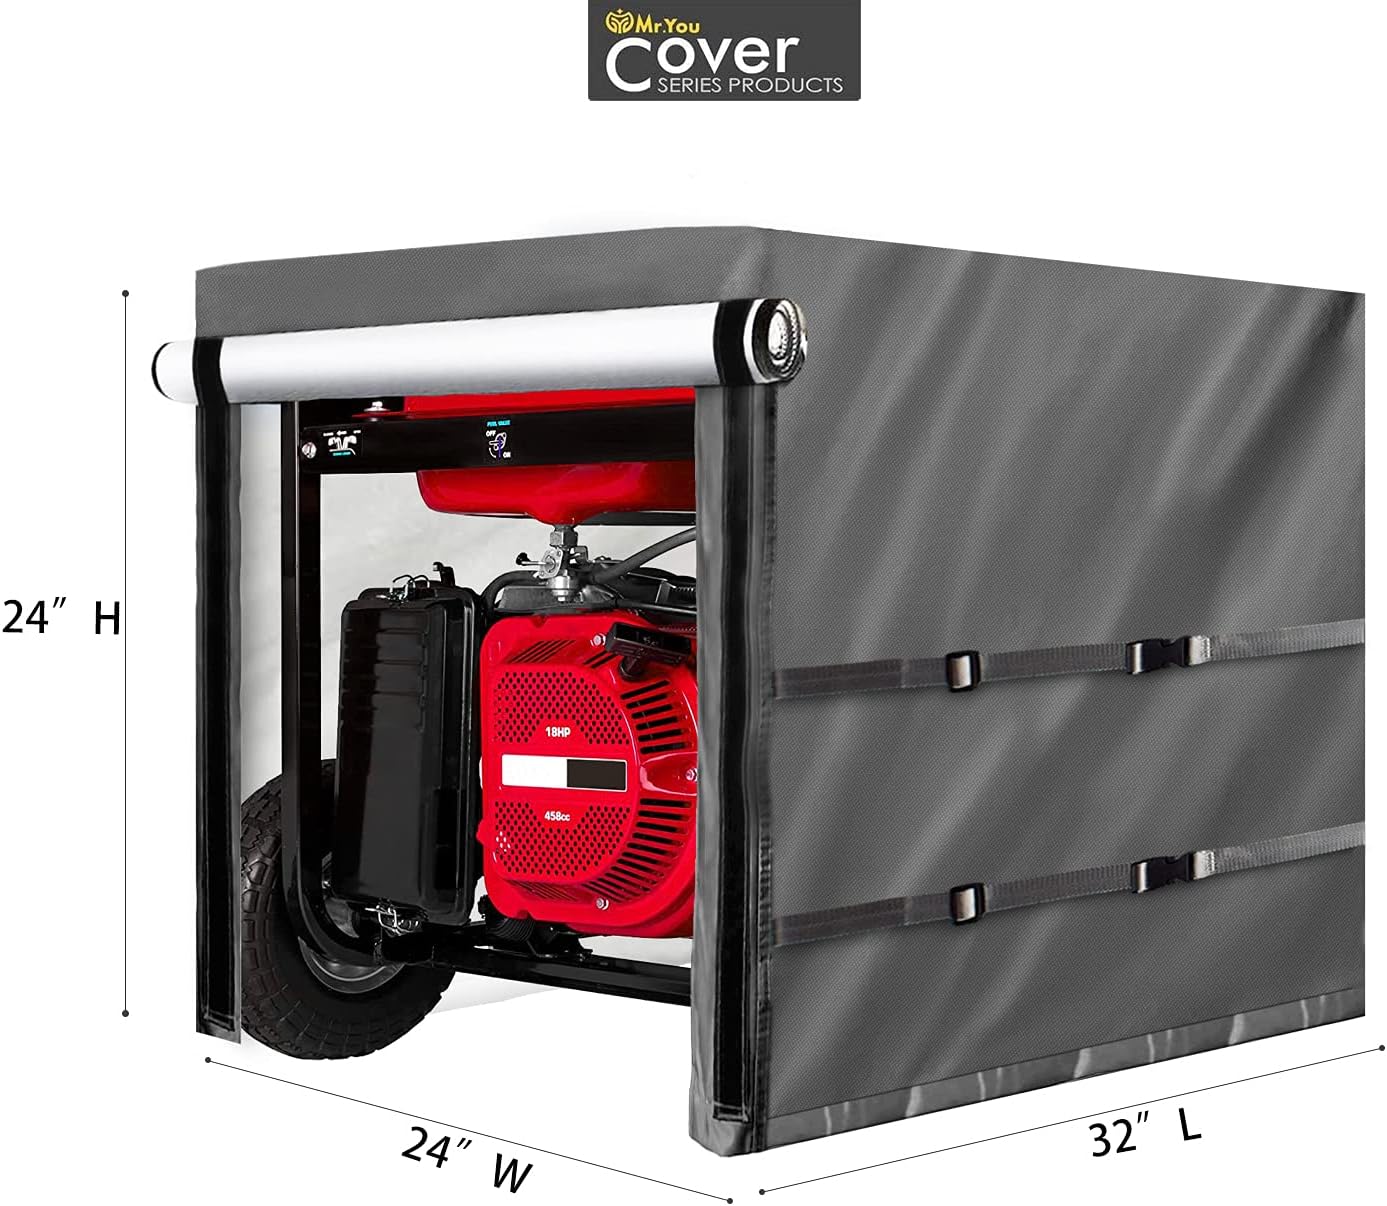 Mr.You Generator Cover Universal Generator Cover fit for Most Generators 5500-15000 Watt Heavy Duty Resistant Storage Cover (Gray) - Mr.You Generator Cover Review